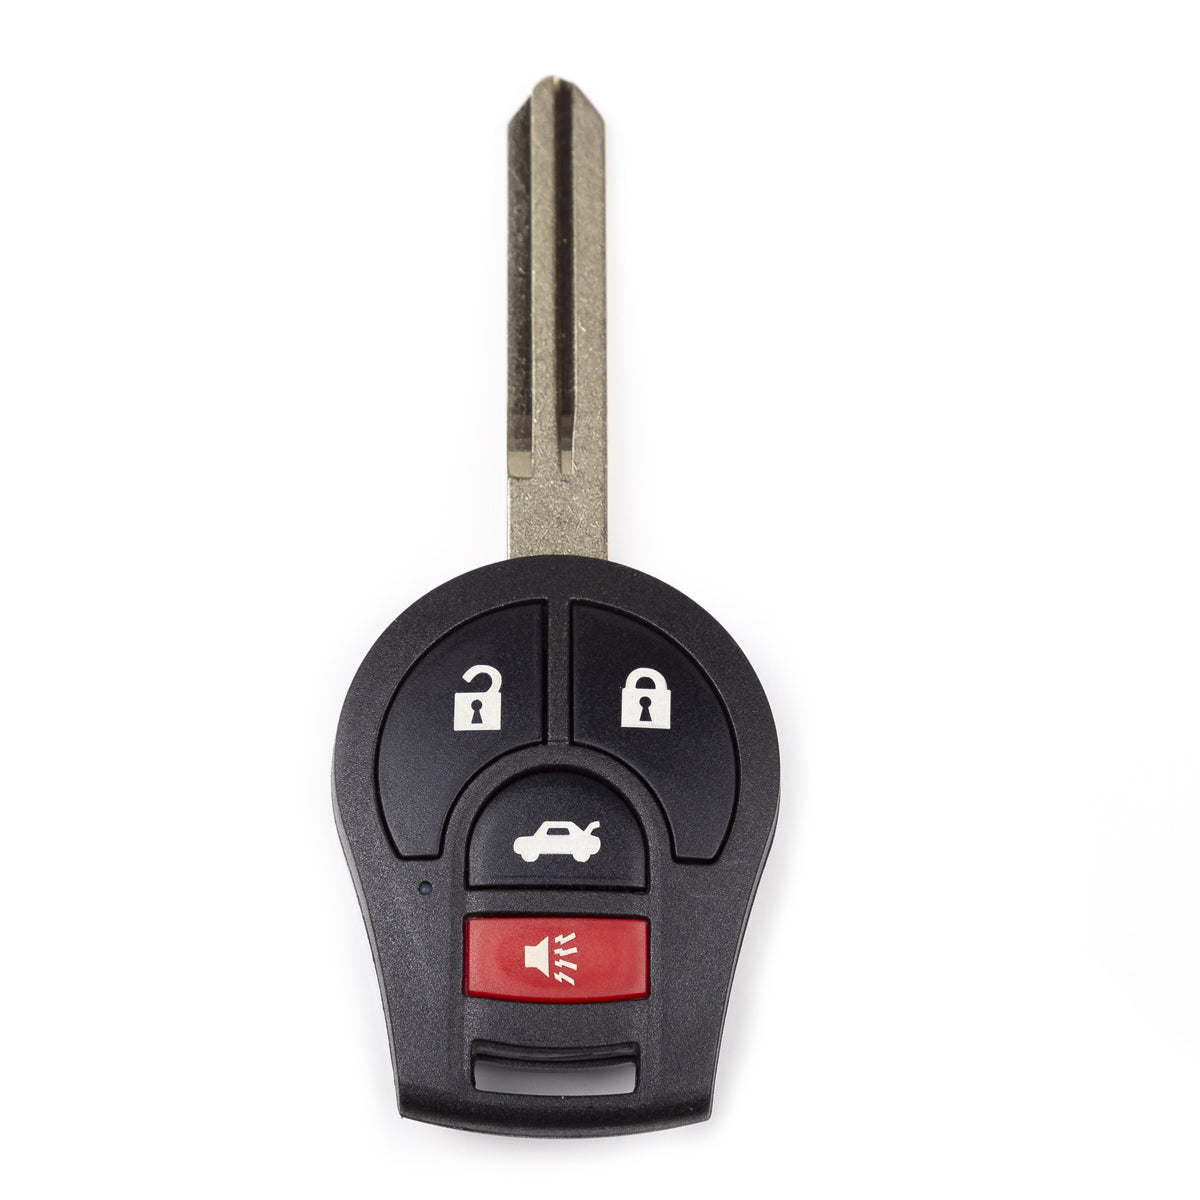 2006 Nissan Altima Key Fob - Aftermarket - 4 Buttons Fob FCC# CWTWB1U751 - ID46 Chip